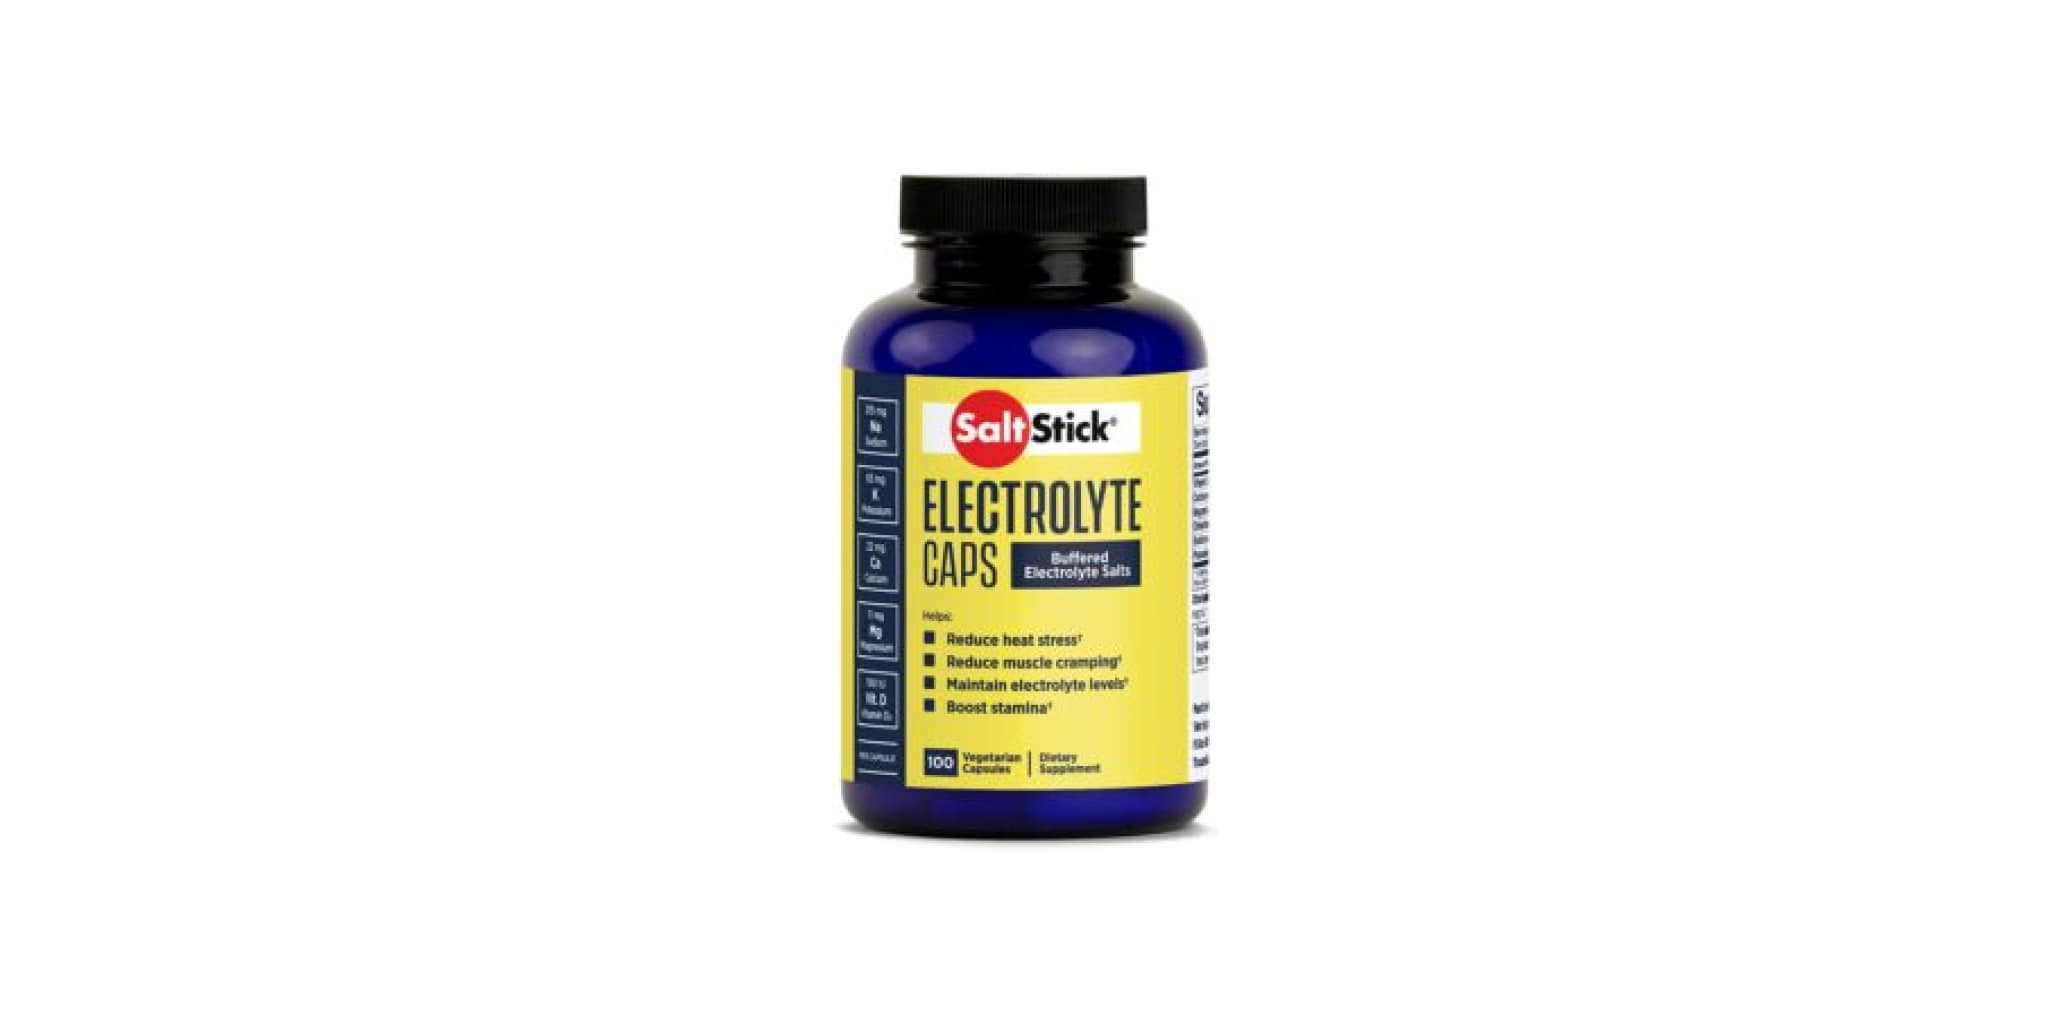 dry fasting and electrolytes electrolytes SaltStick Electrolyte